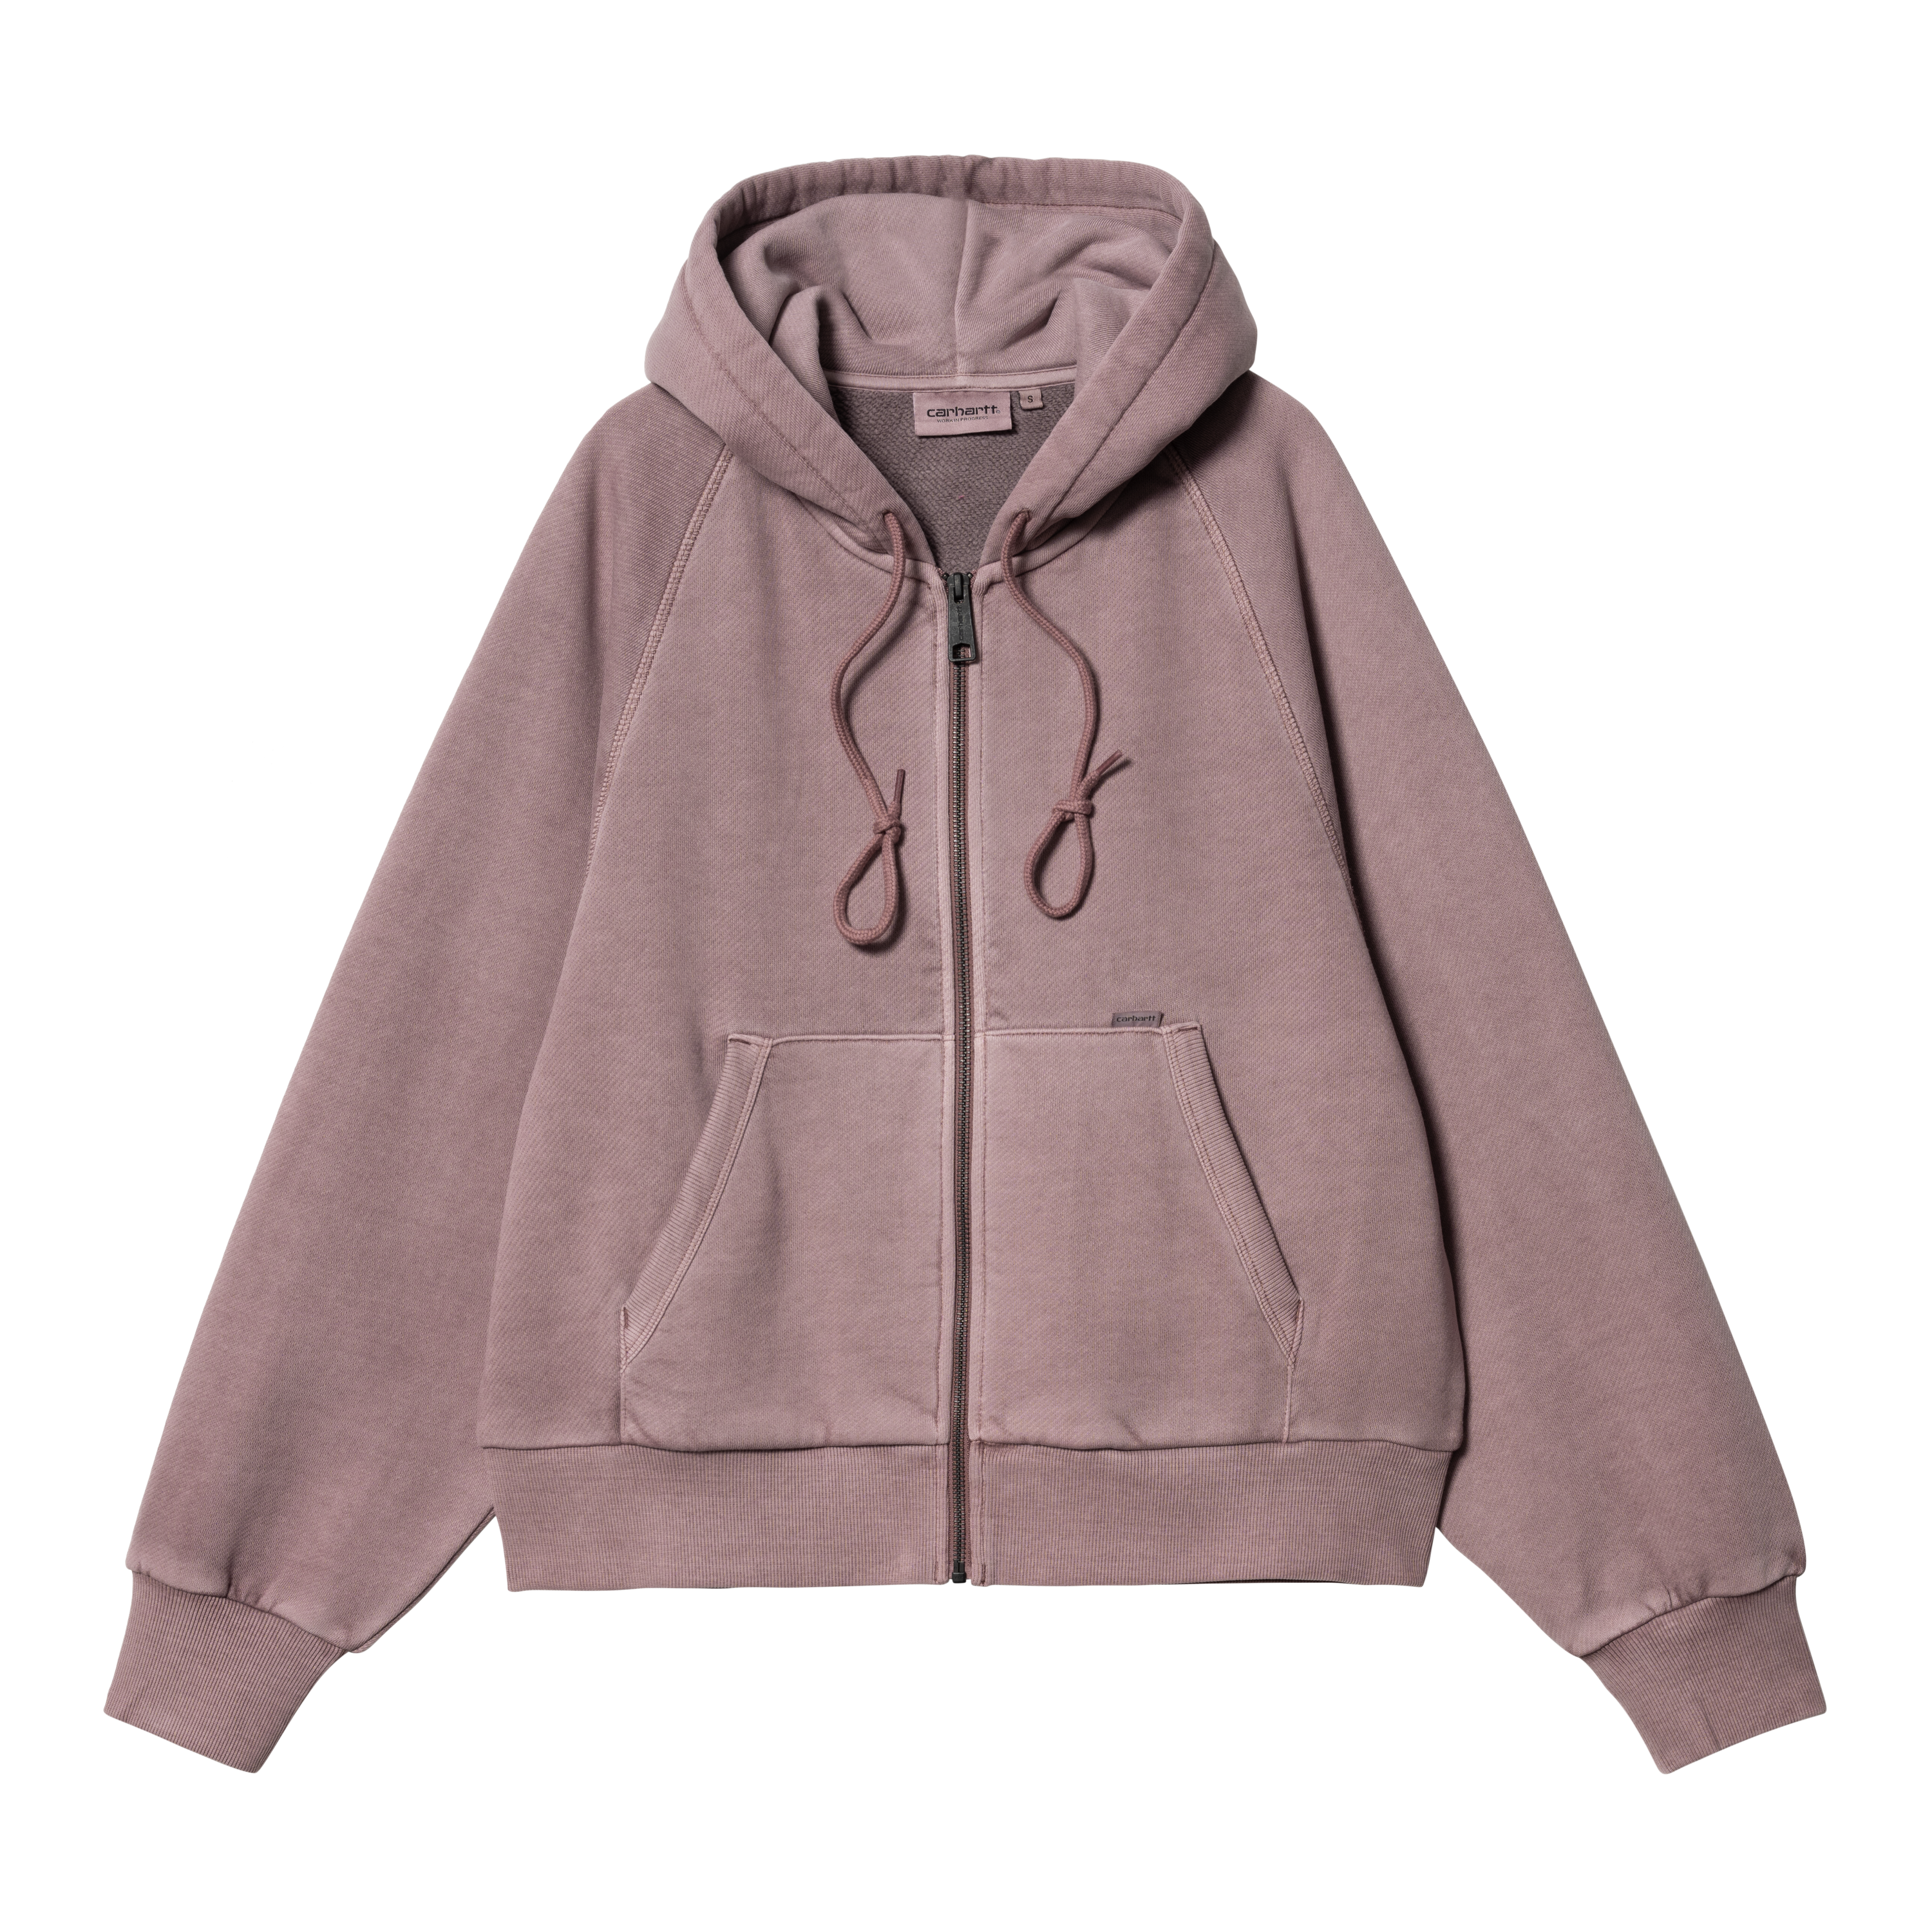 Carhartt WIP Women’s Hooded Taos Jacket in Pink